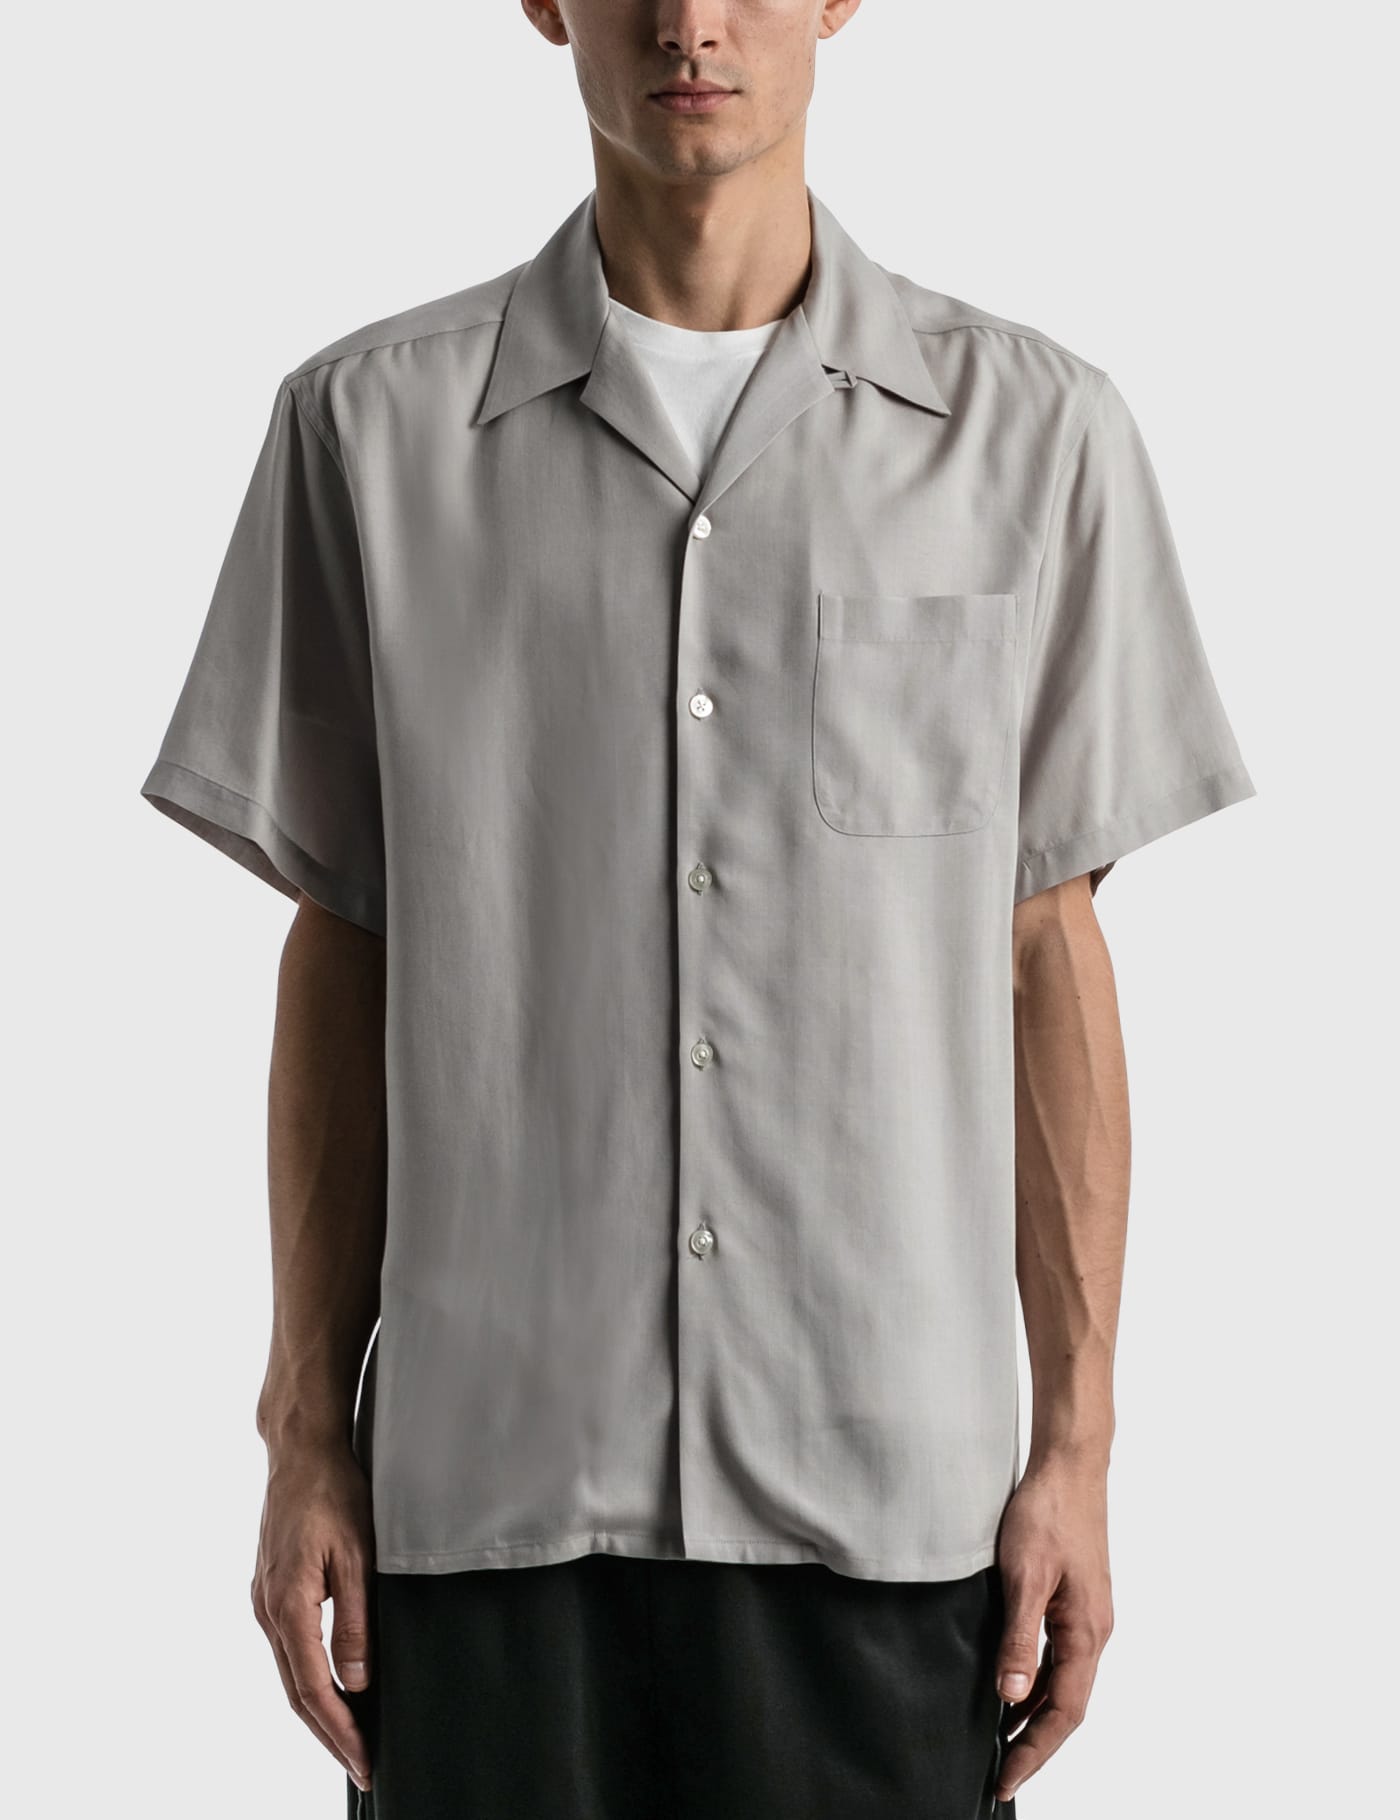 Wacko Maria - 50's Shirt ( Type-4 ) | HBX - ハイプビースト ...